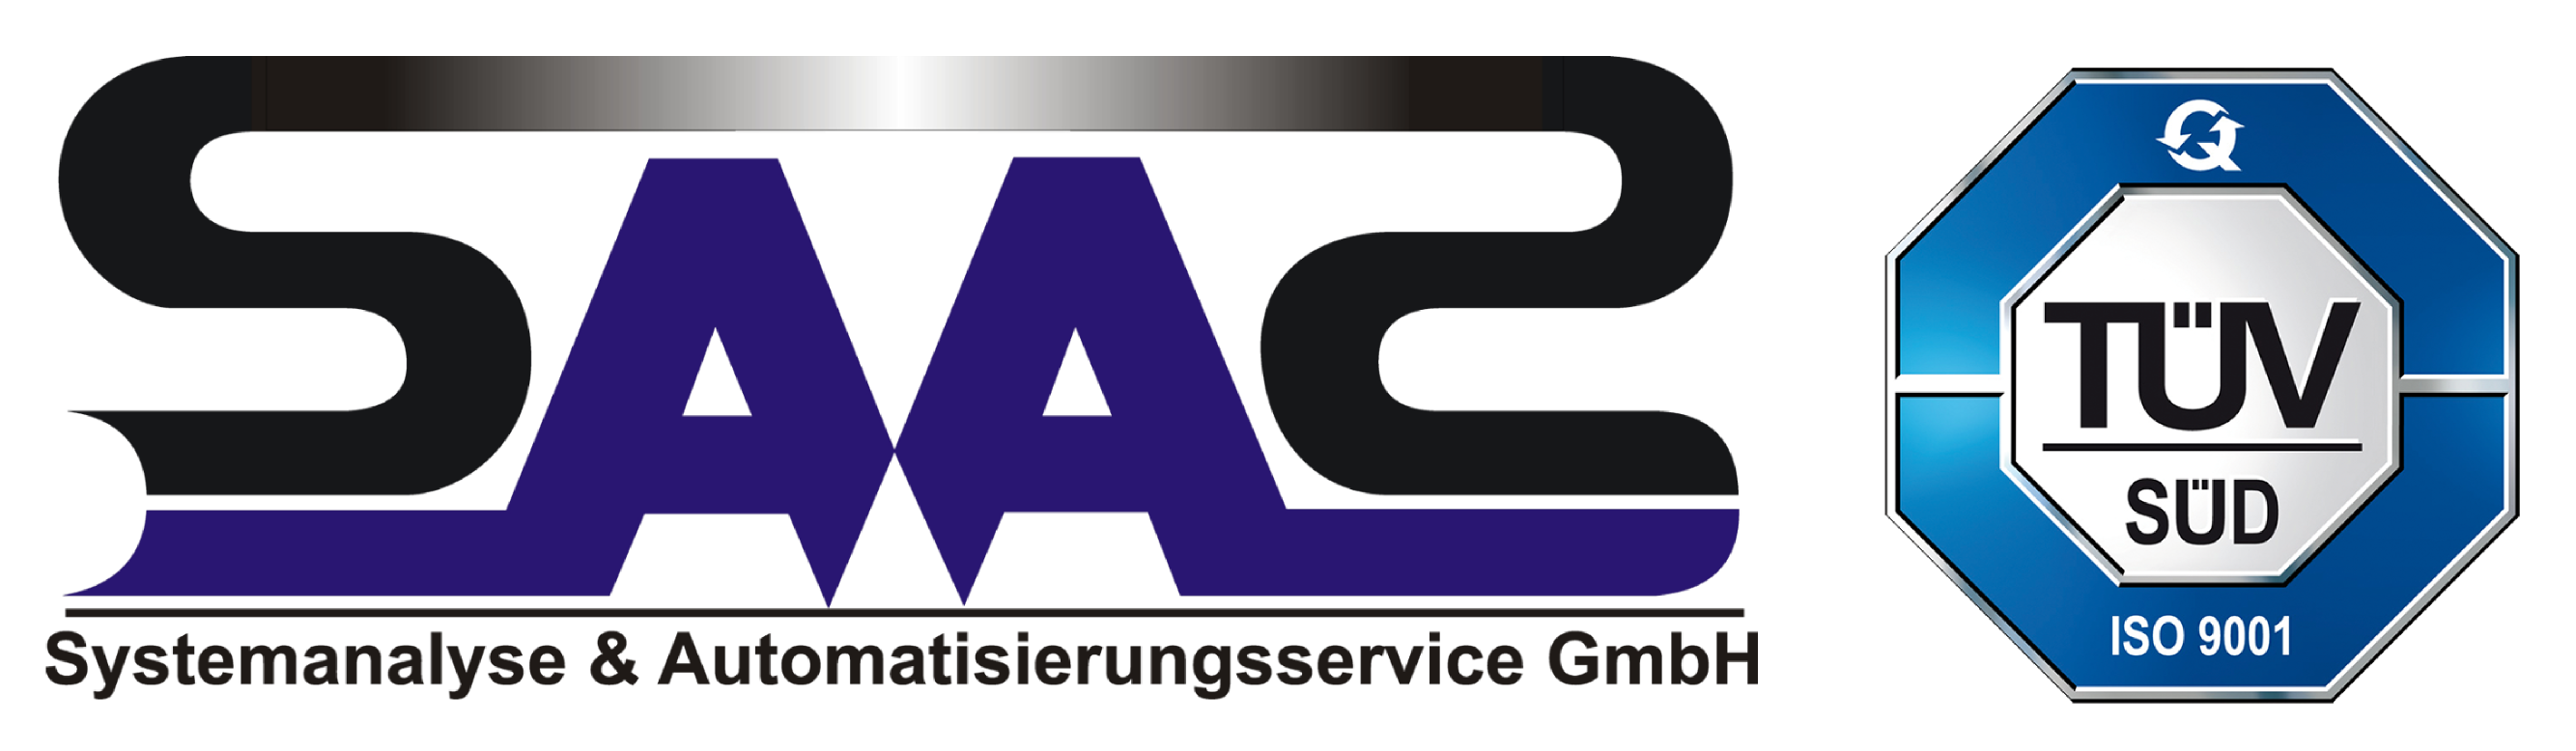 SAAS GmbH